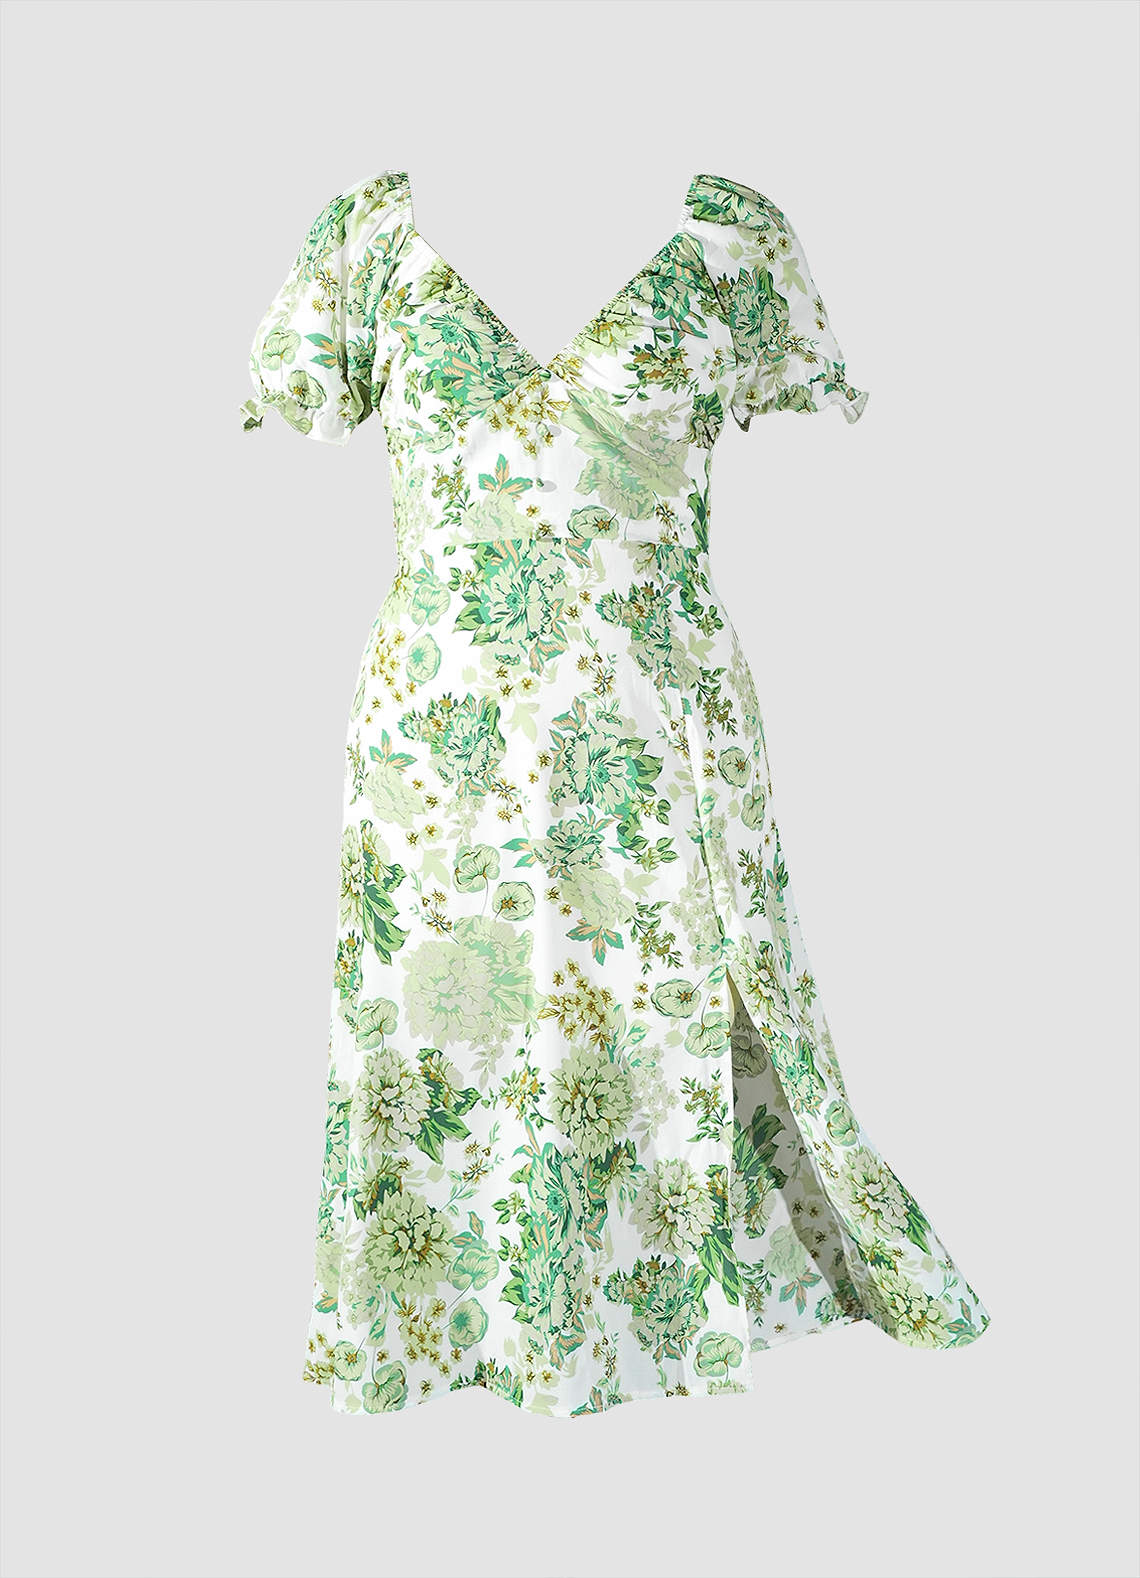 Green Floral Long Modern Cheongsam / Qipao Party Dress - IMALLURE – imallure